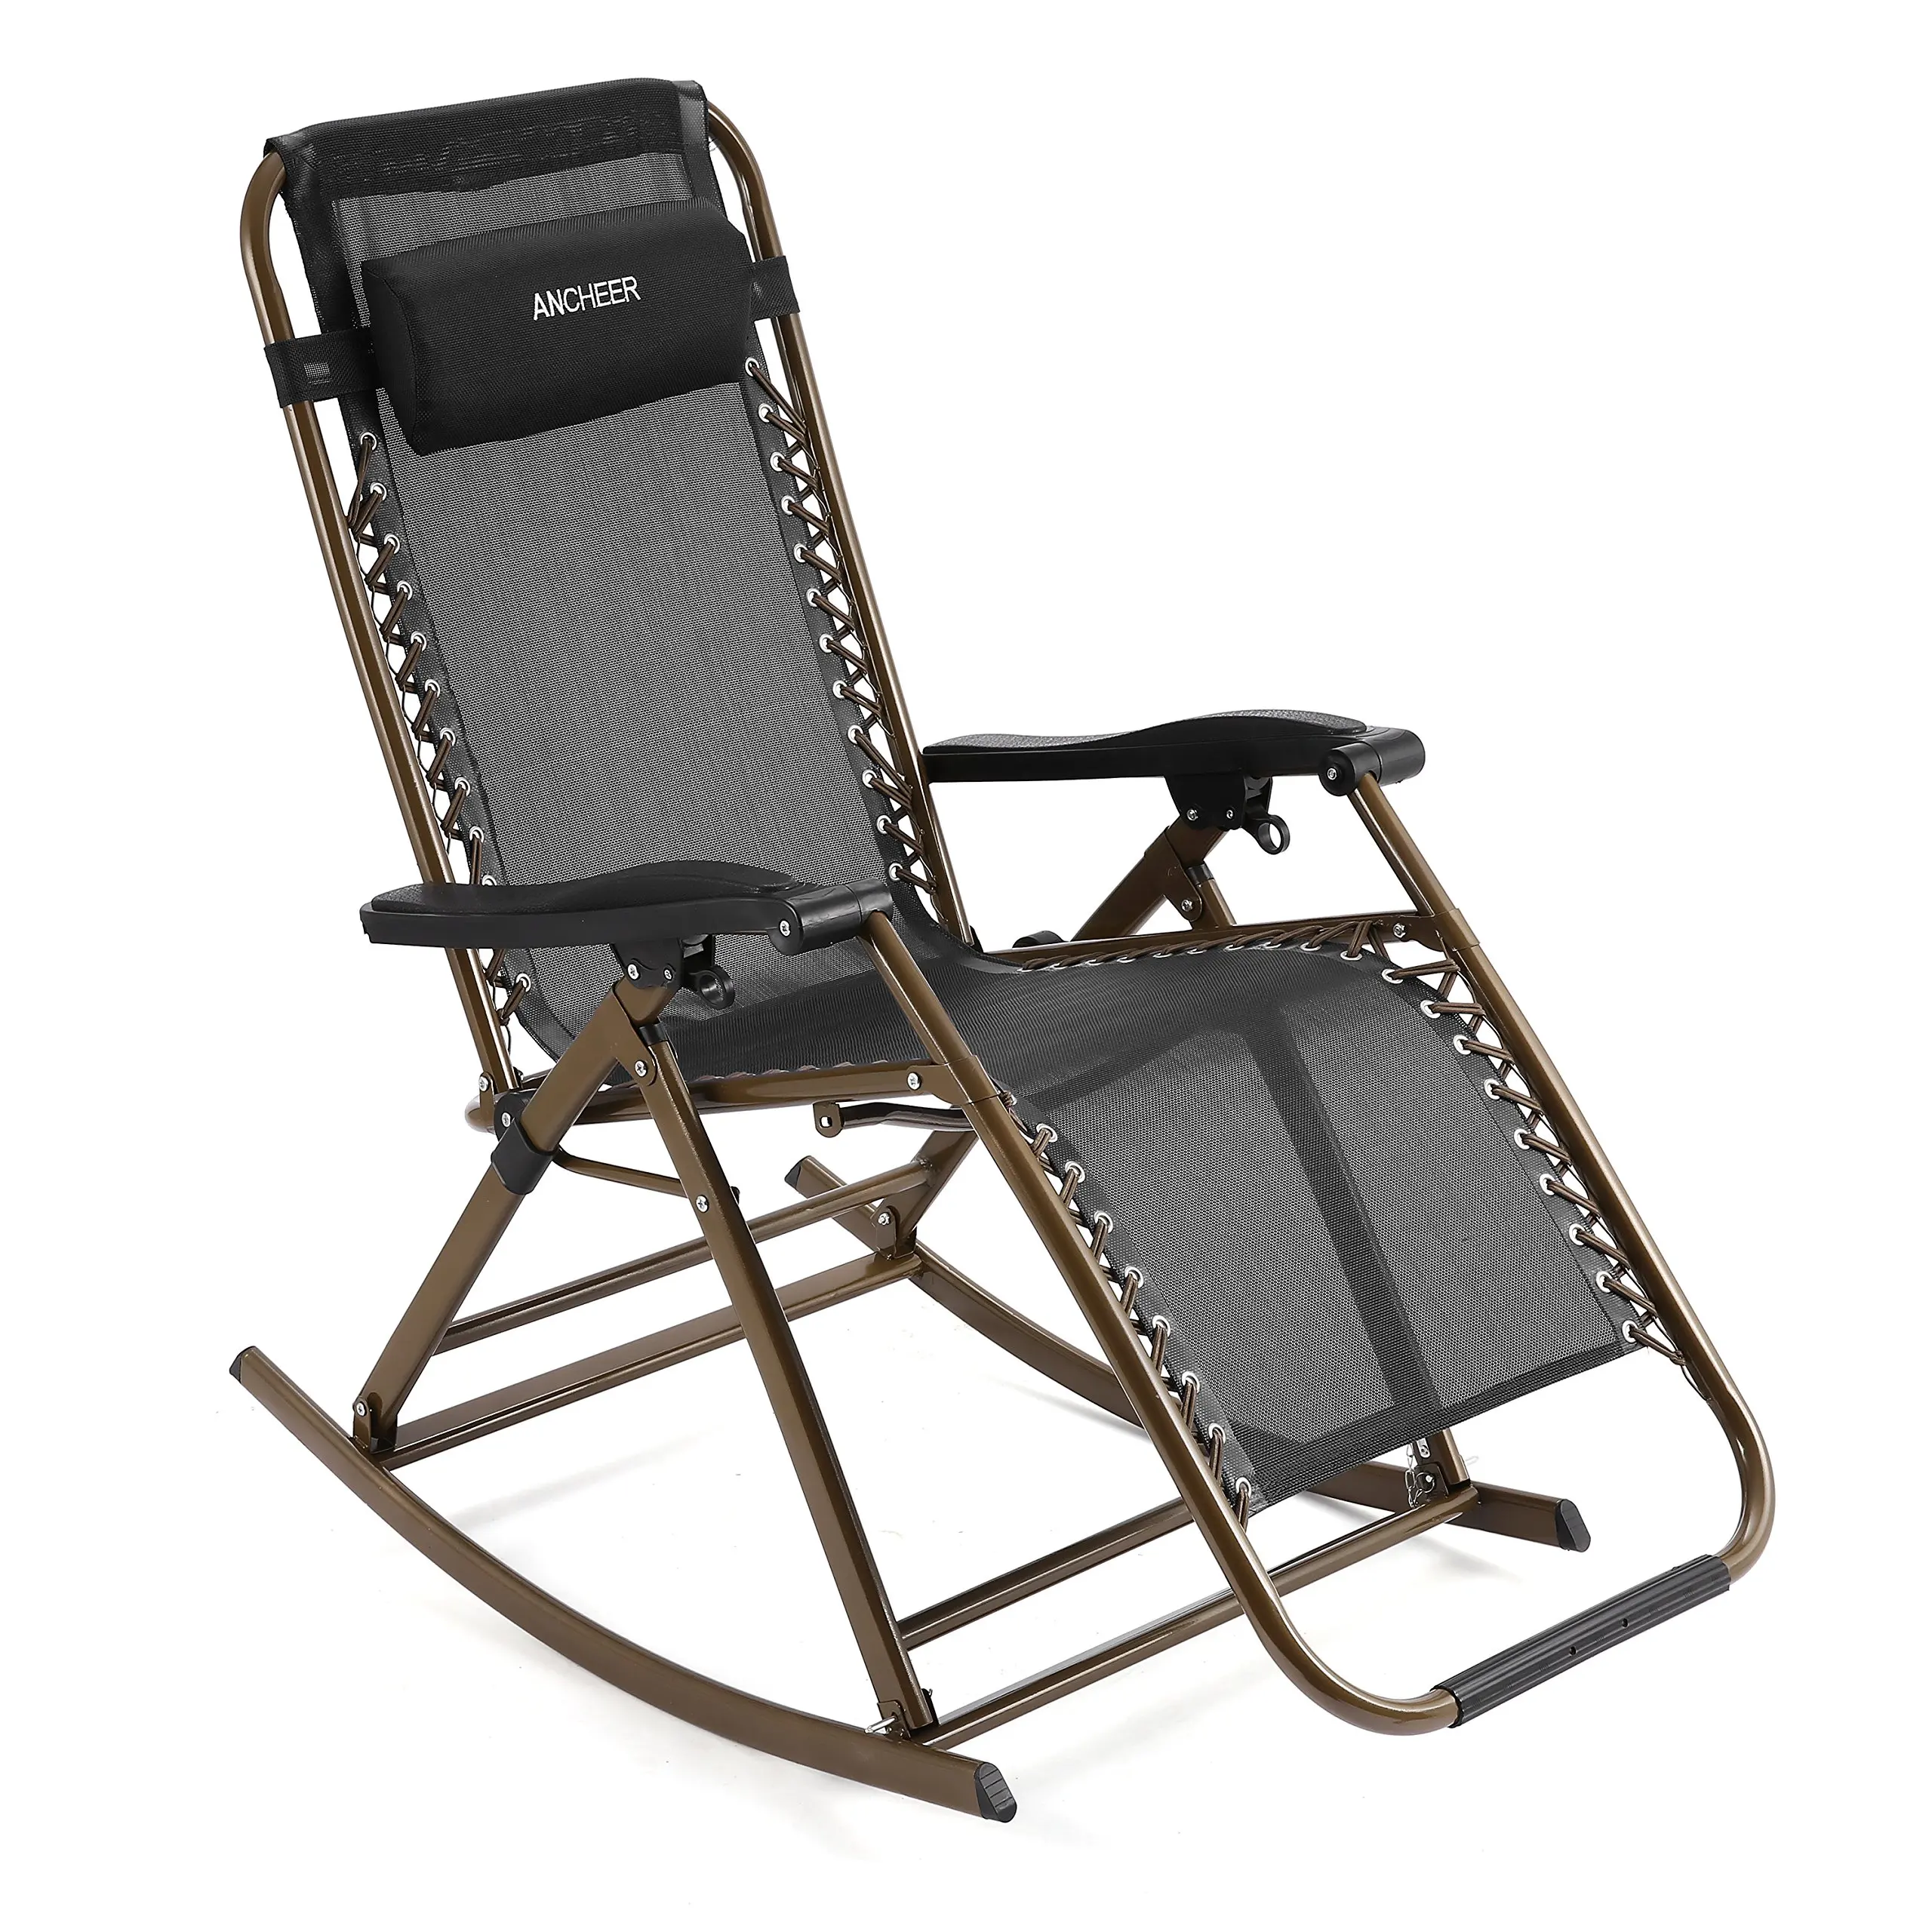 Cheap Rocking Lawn Chair Folding, find Rocking Lawn Chair Folding deals